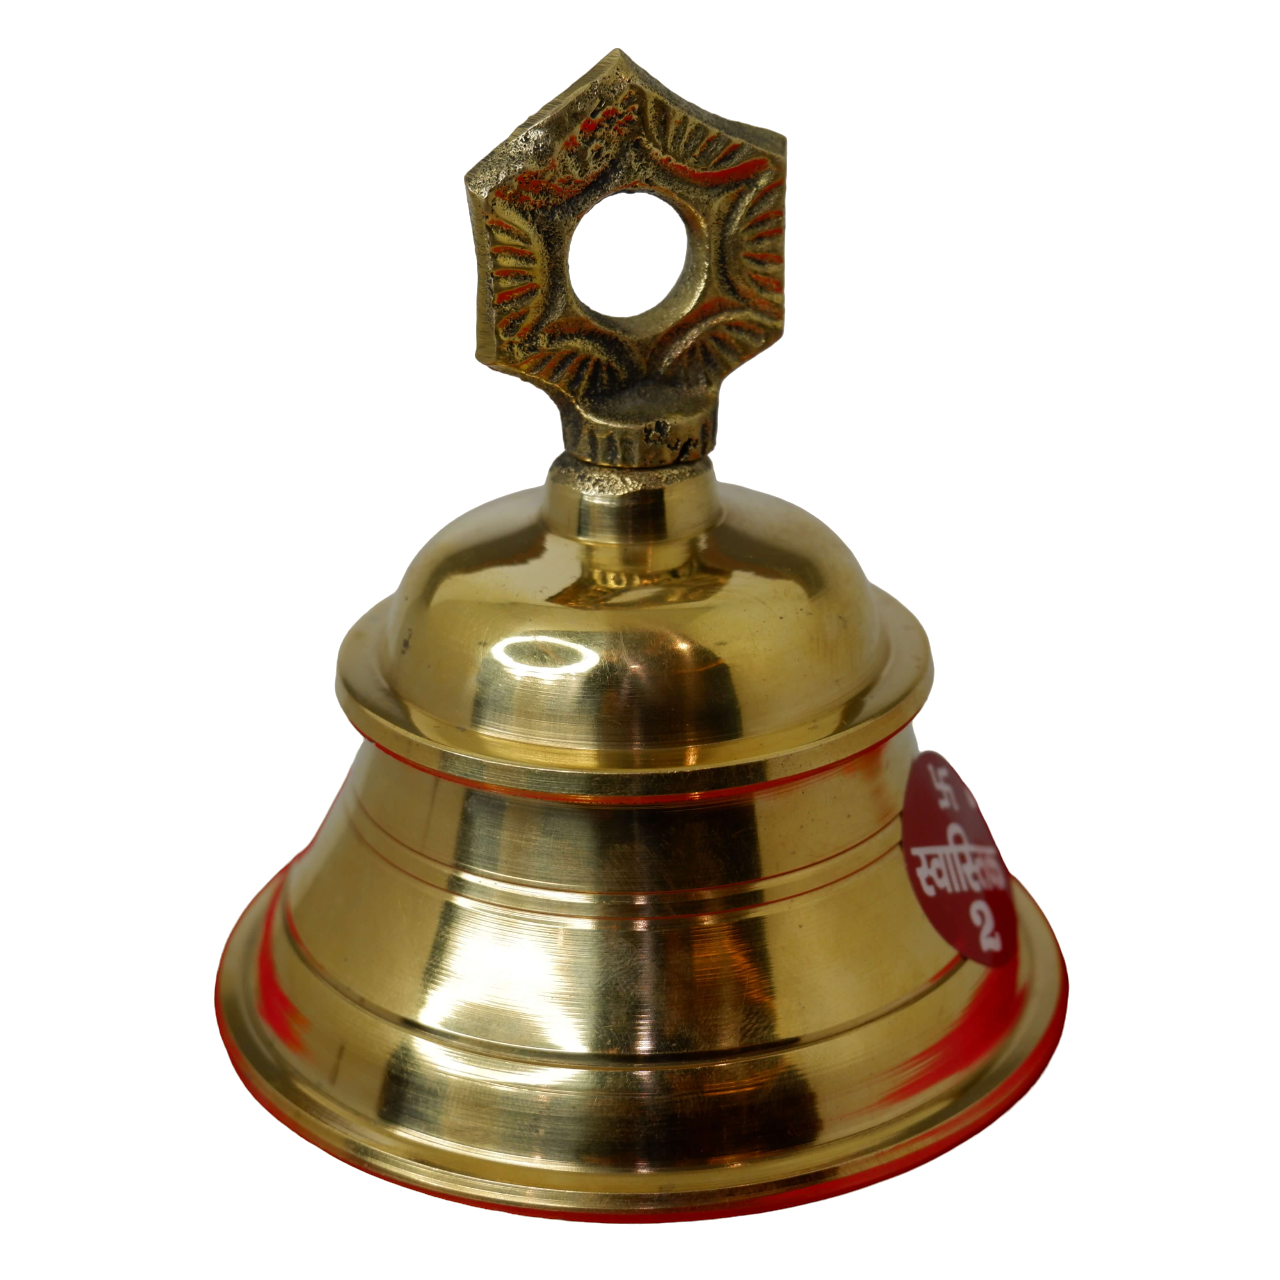 Mandir Ghanta, Pooja Bell, Hanging Bell for Mandir (Large)